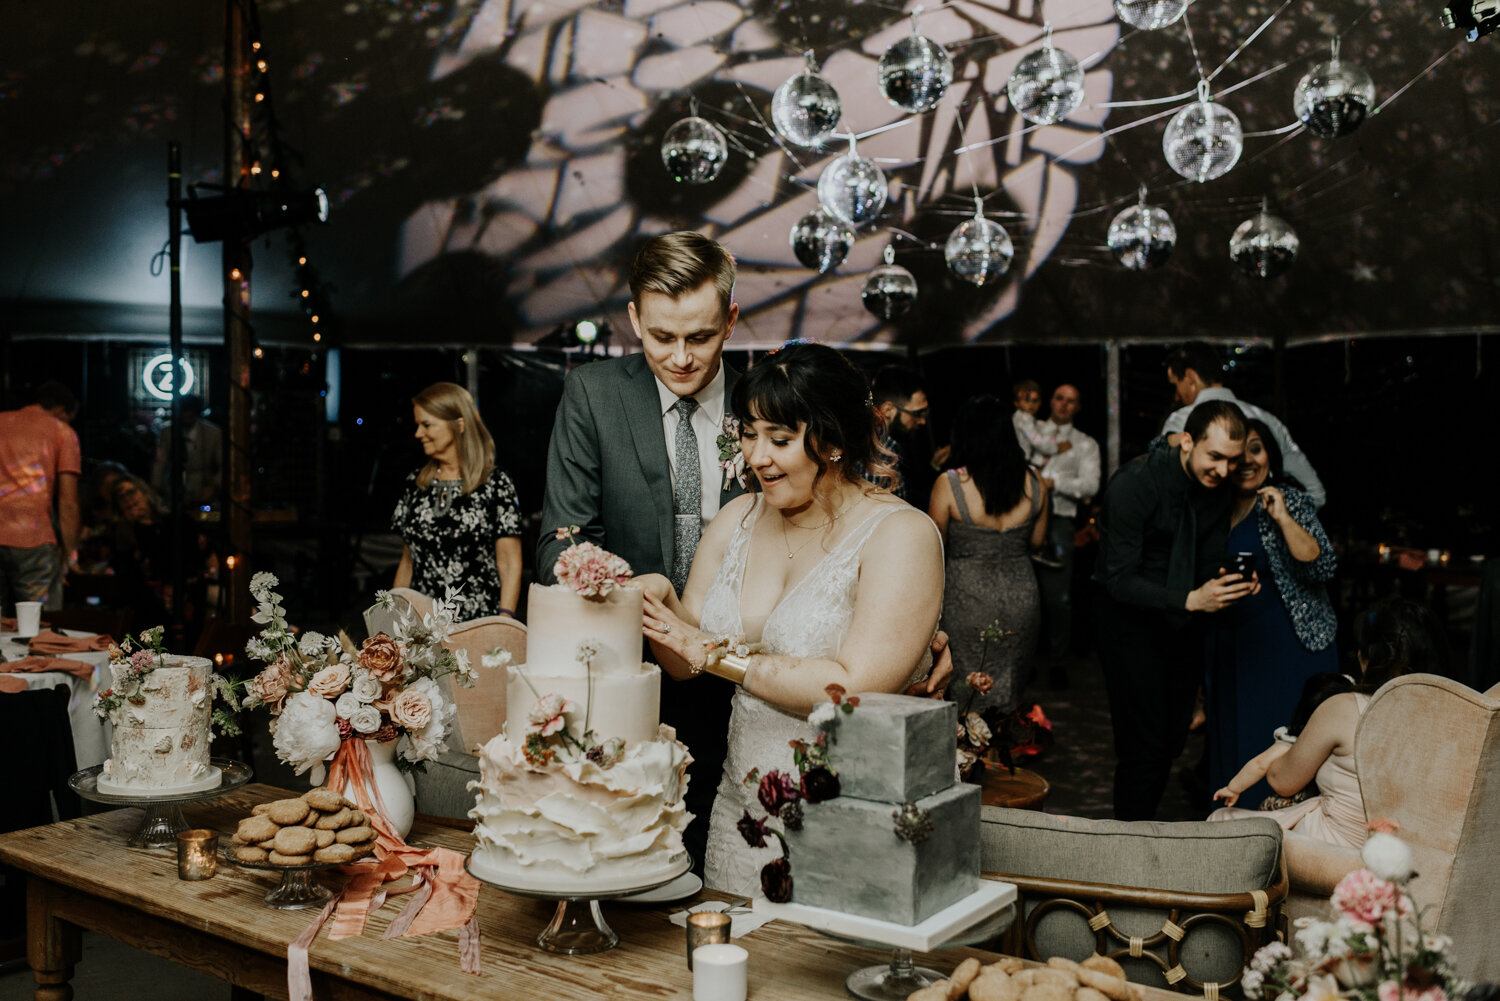 Cake Cutting Wedding Reception Traditions in Austin, Texas